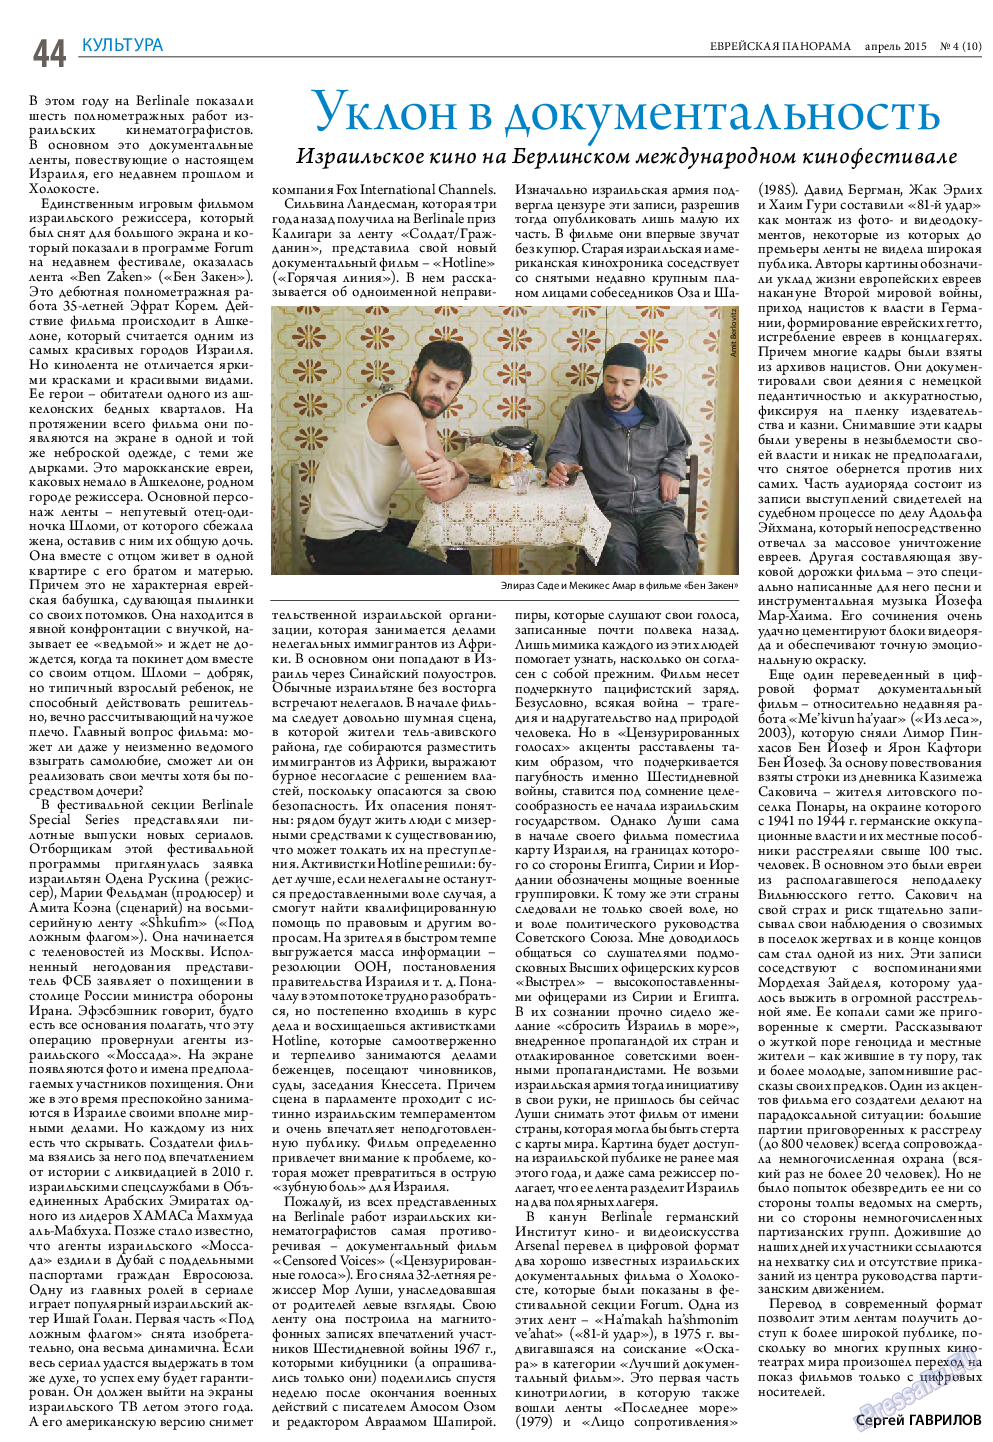 Еврейская панорама, газета. 2015 №4 стр.44